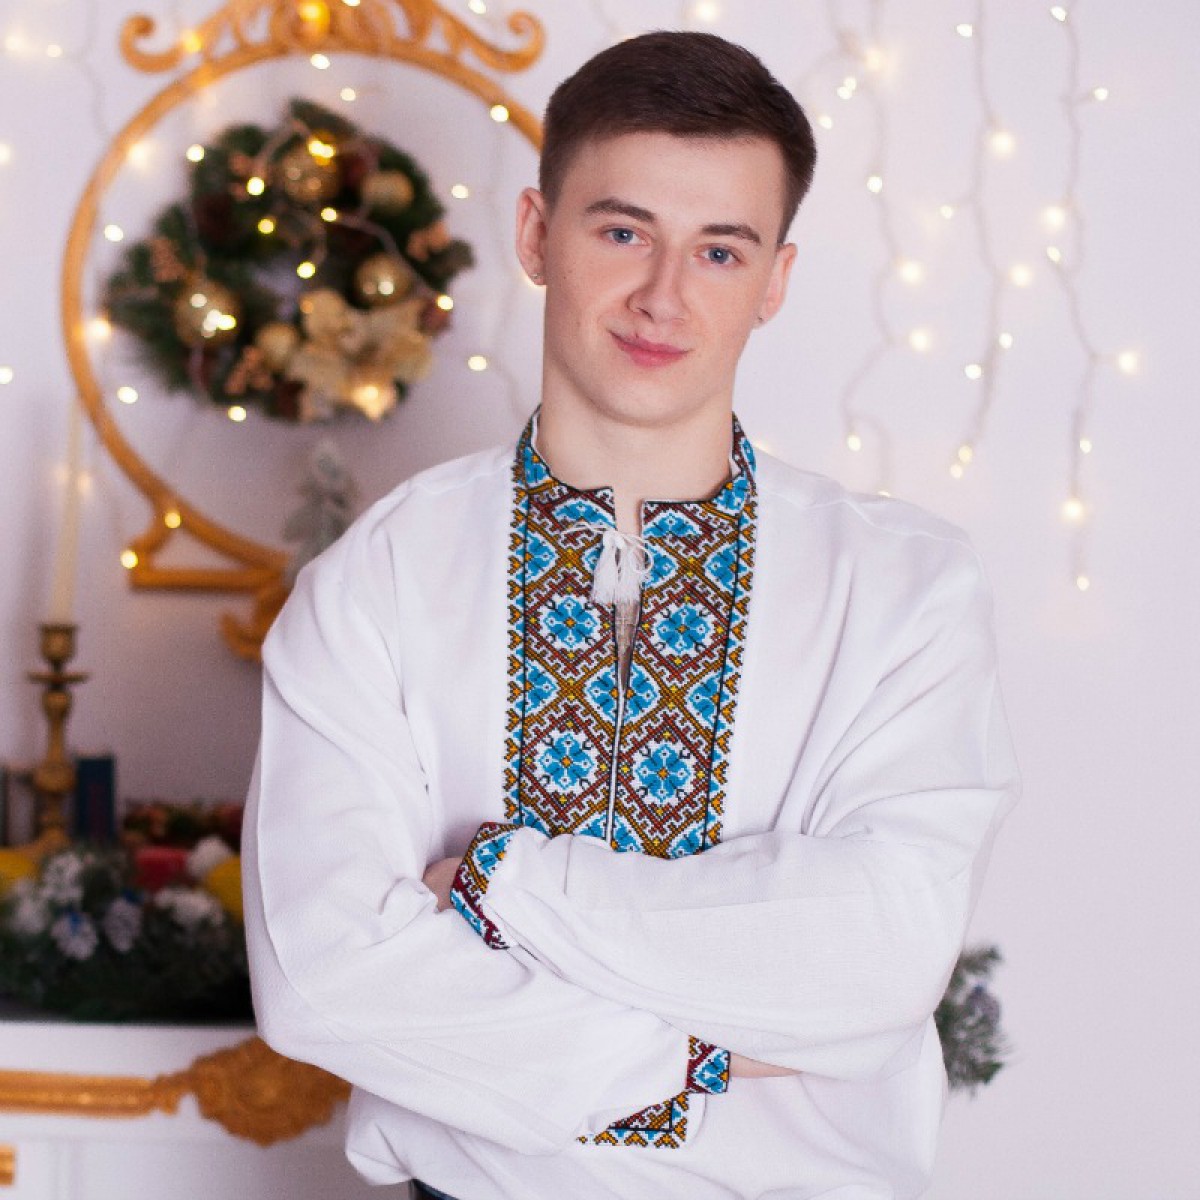 Мужья украинцы. Украинцы парни. Красивые украинские мужчины. Украинцы внешность. Красивые украинцы парни.